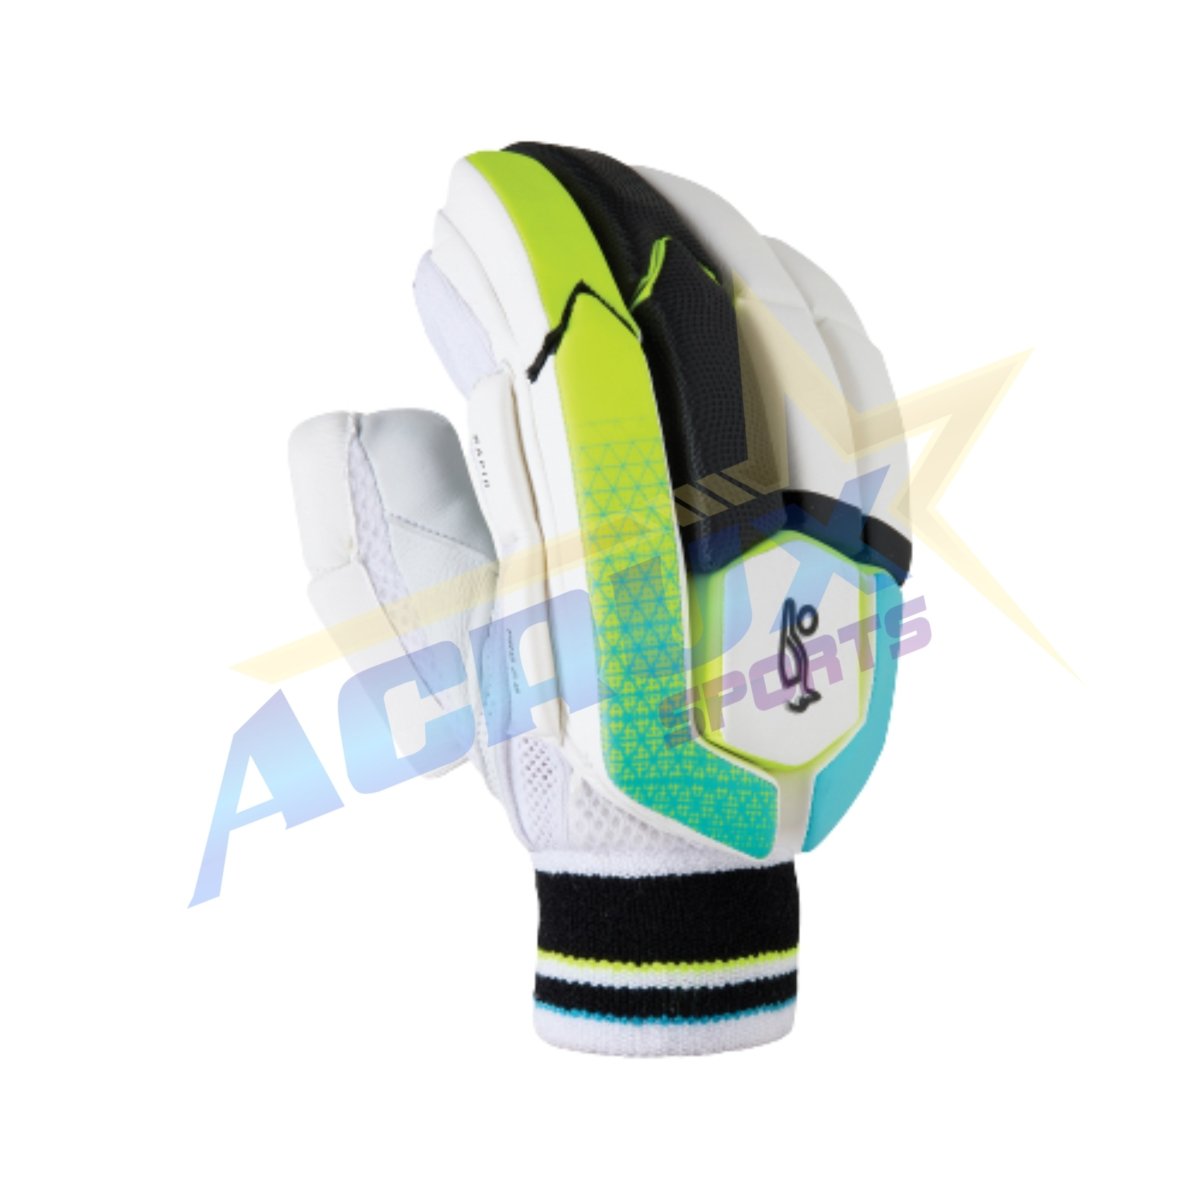 Kookaburra Rapid Pro 2.0 Cricket Batting Gloves - Acrux Sports